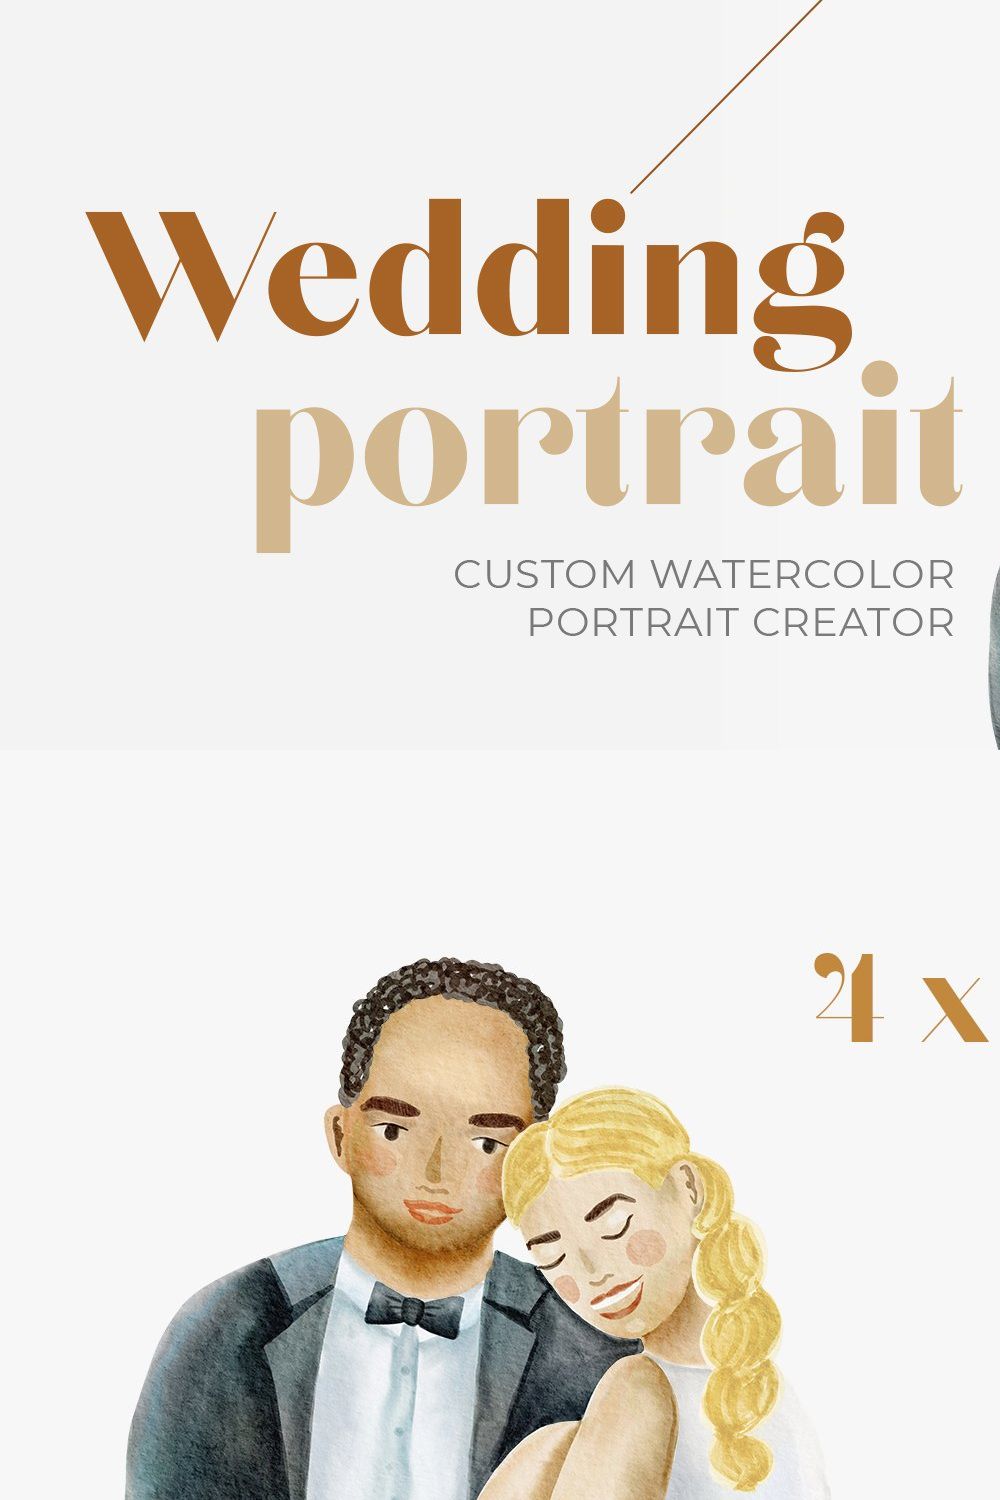 Custom Wedding Portrait Creator pinterest preview image.